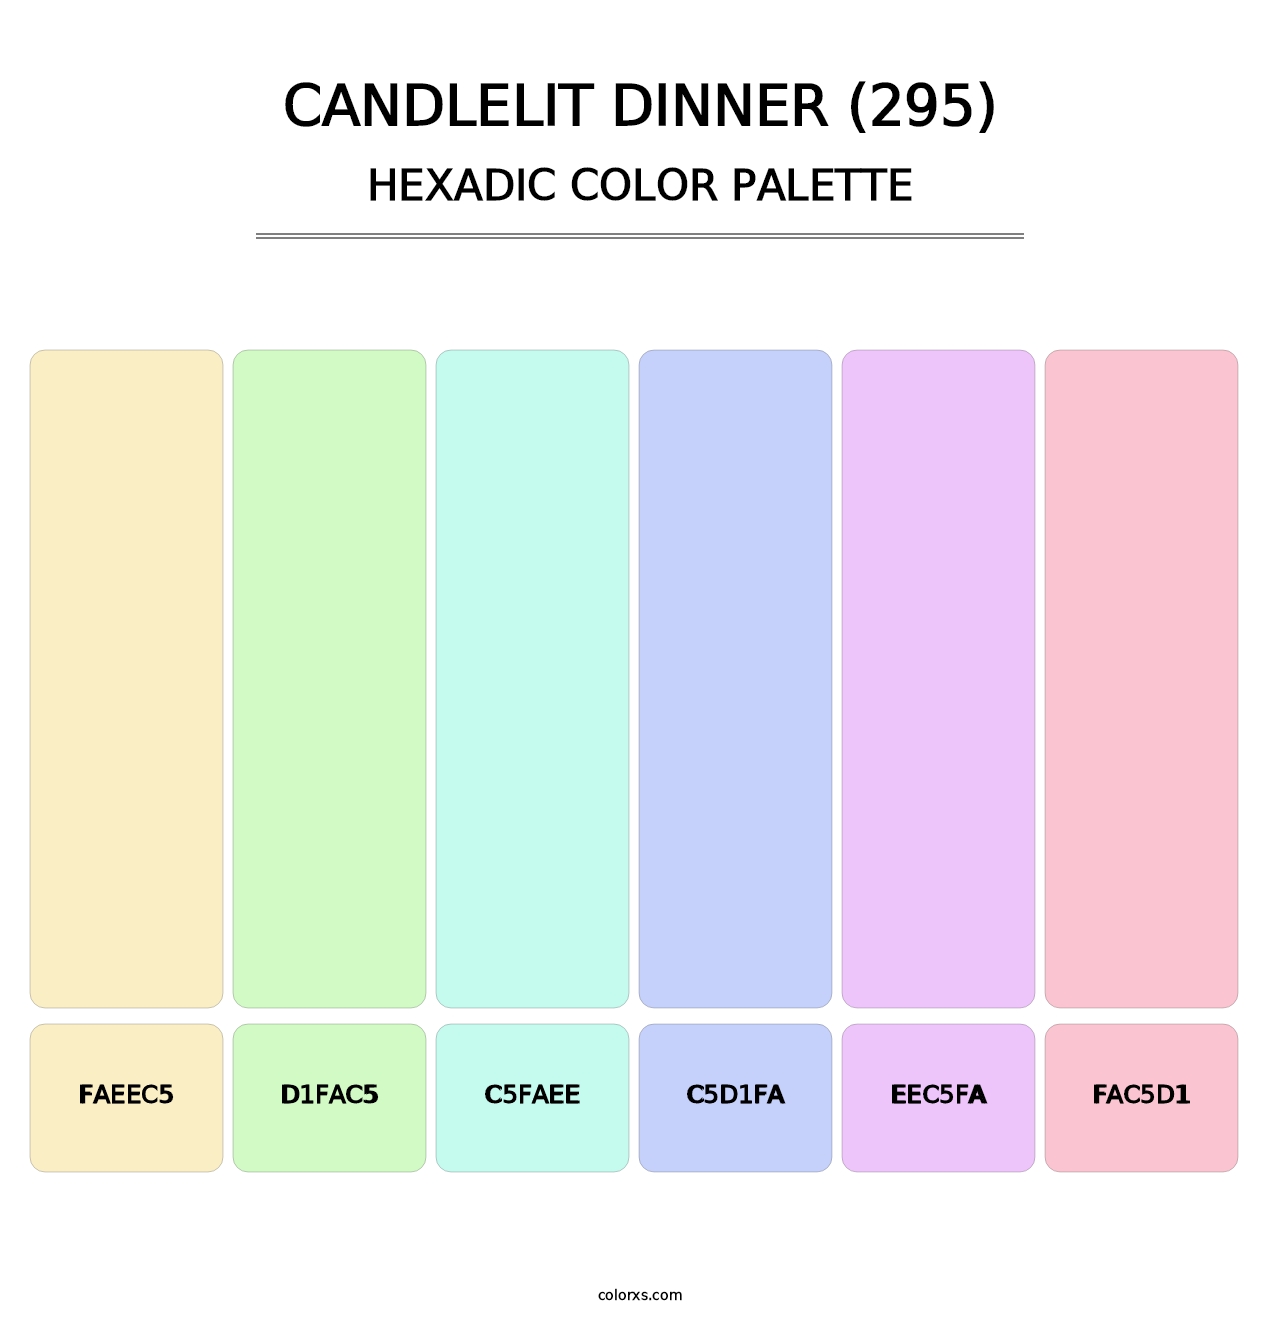 Candlelit Dinner (295) - Hexadic Color Palette